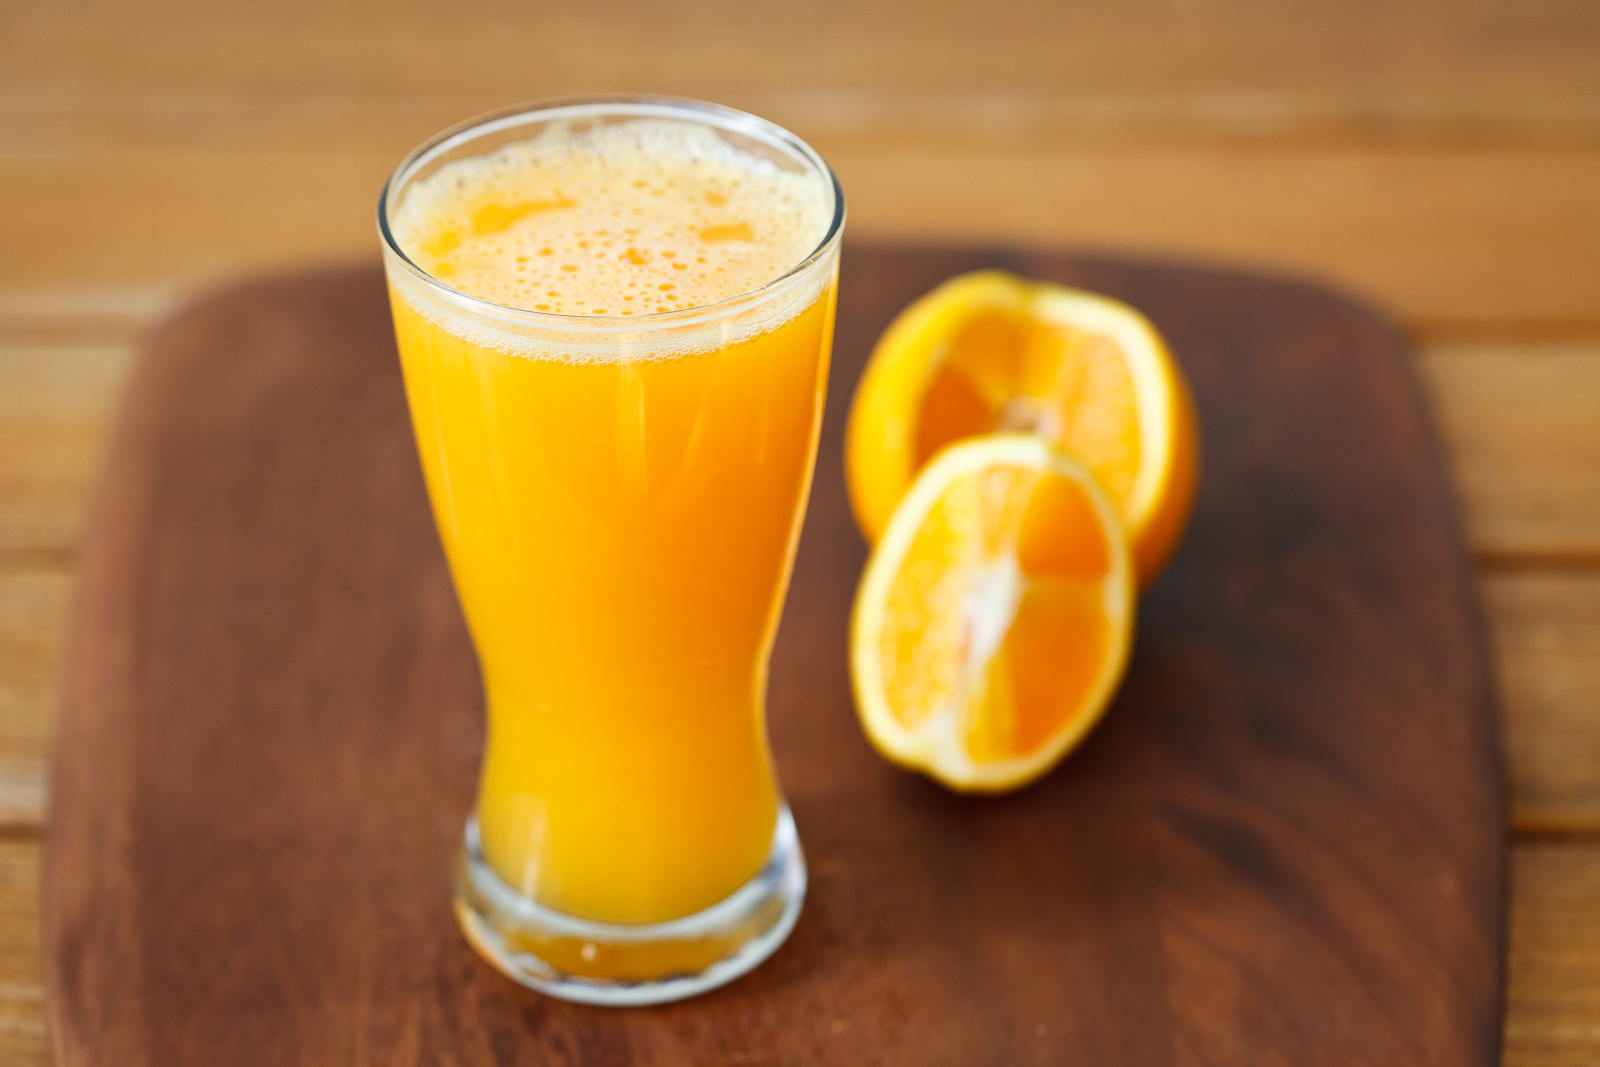 glass of fresh orange juice